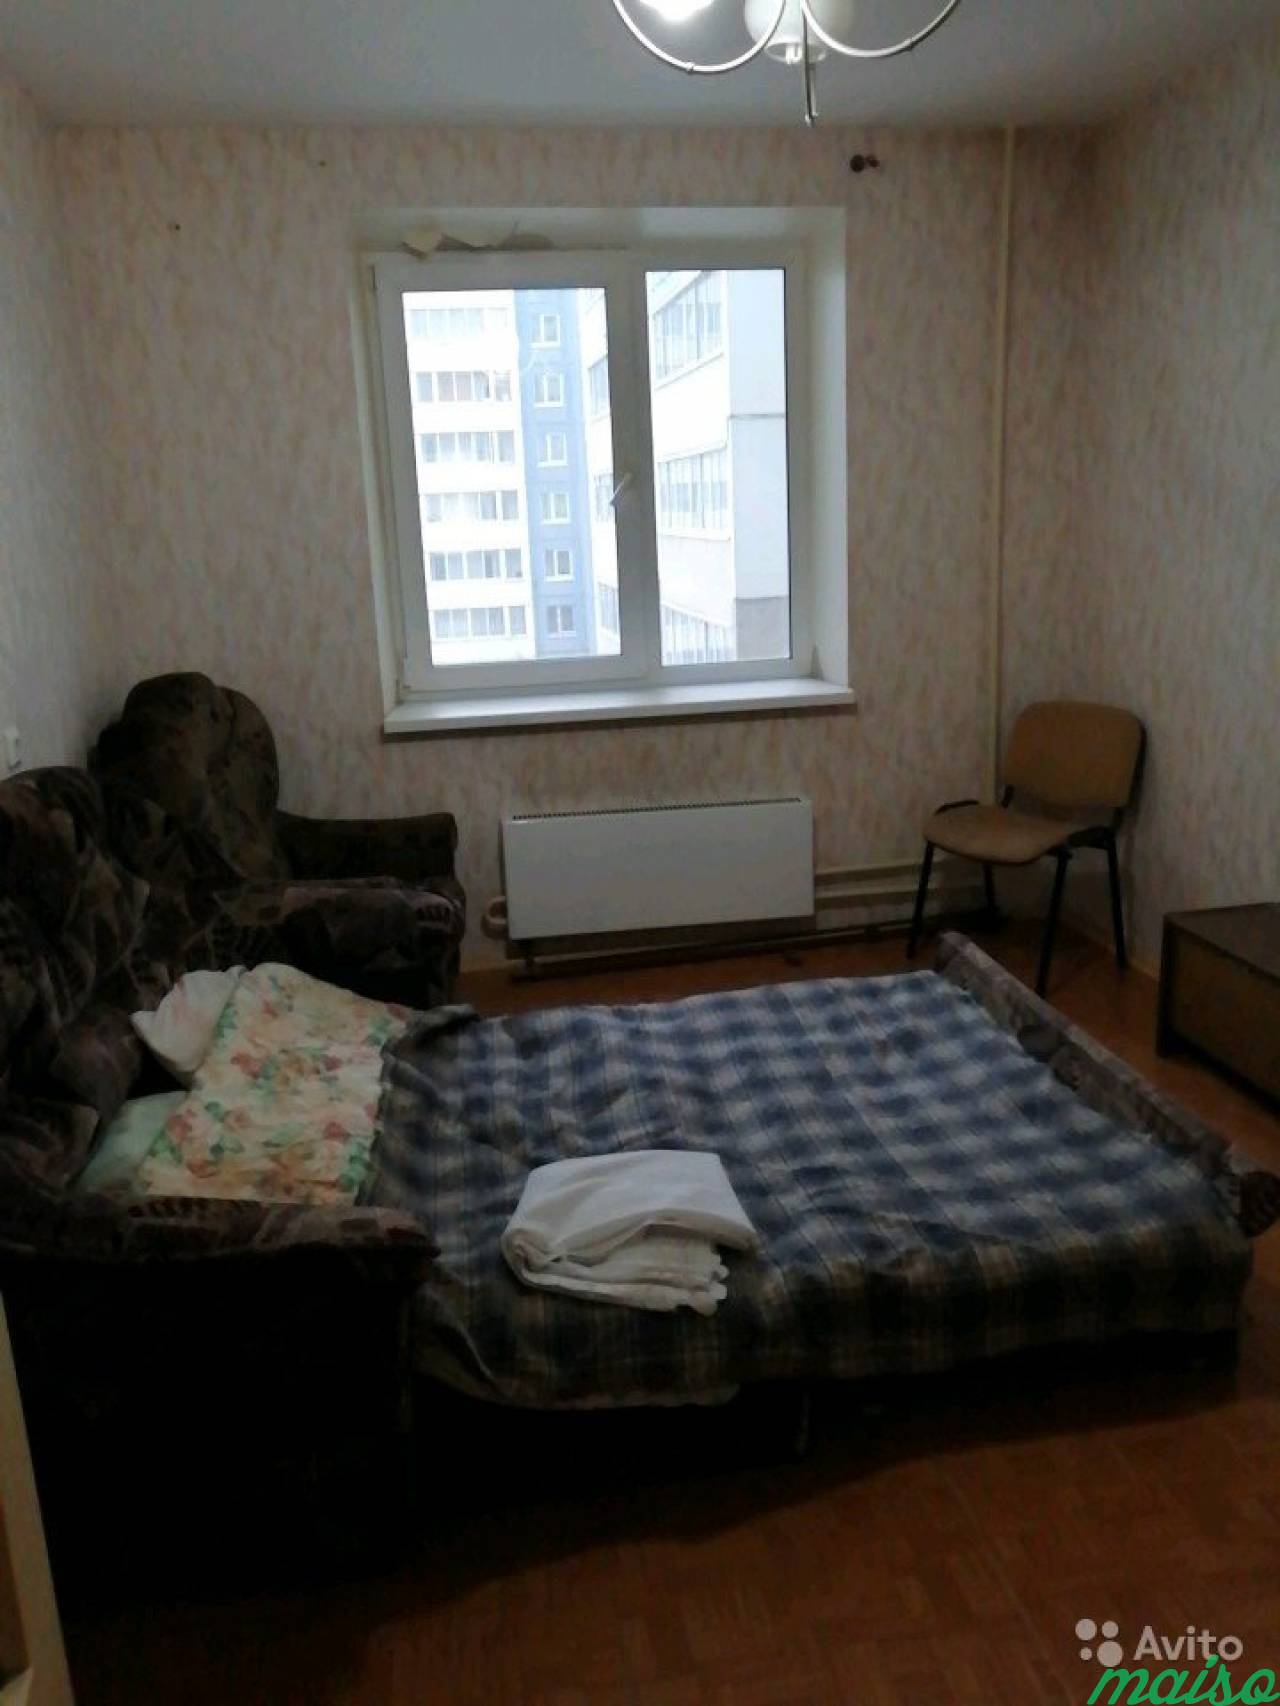 Комната 11 м² в 3-к, 3/10 эт. в Санкт-Петербурге. Фото 1